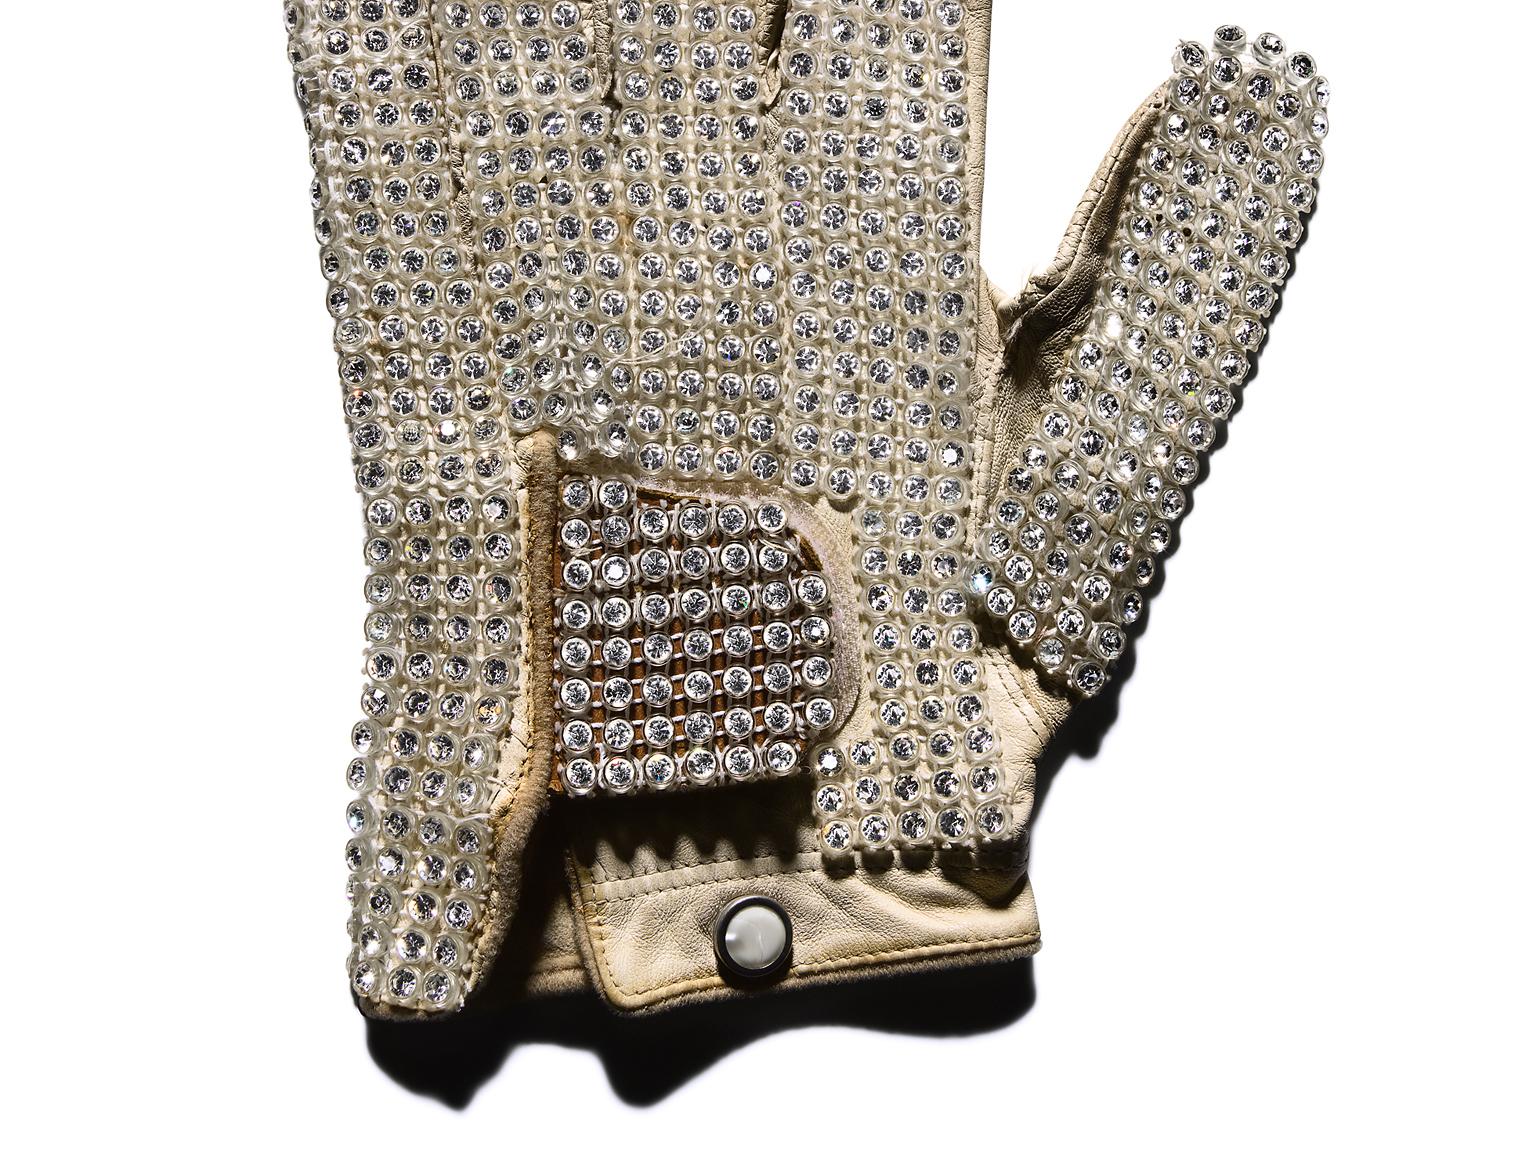 White Glove ( Michael Jackson ) - large format photograph of iconic rhinestones - Photograph by Tom Schierlitz